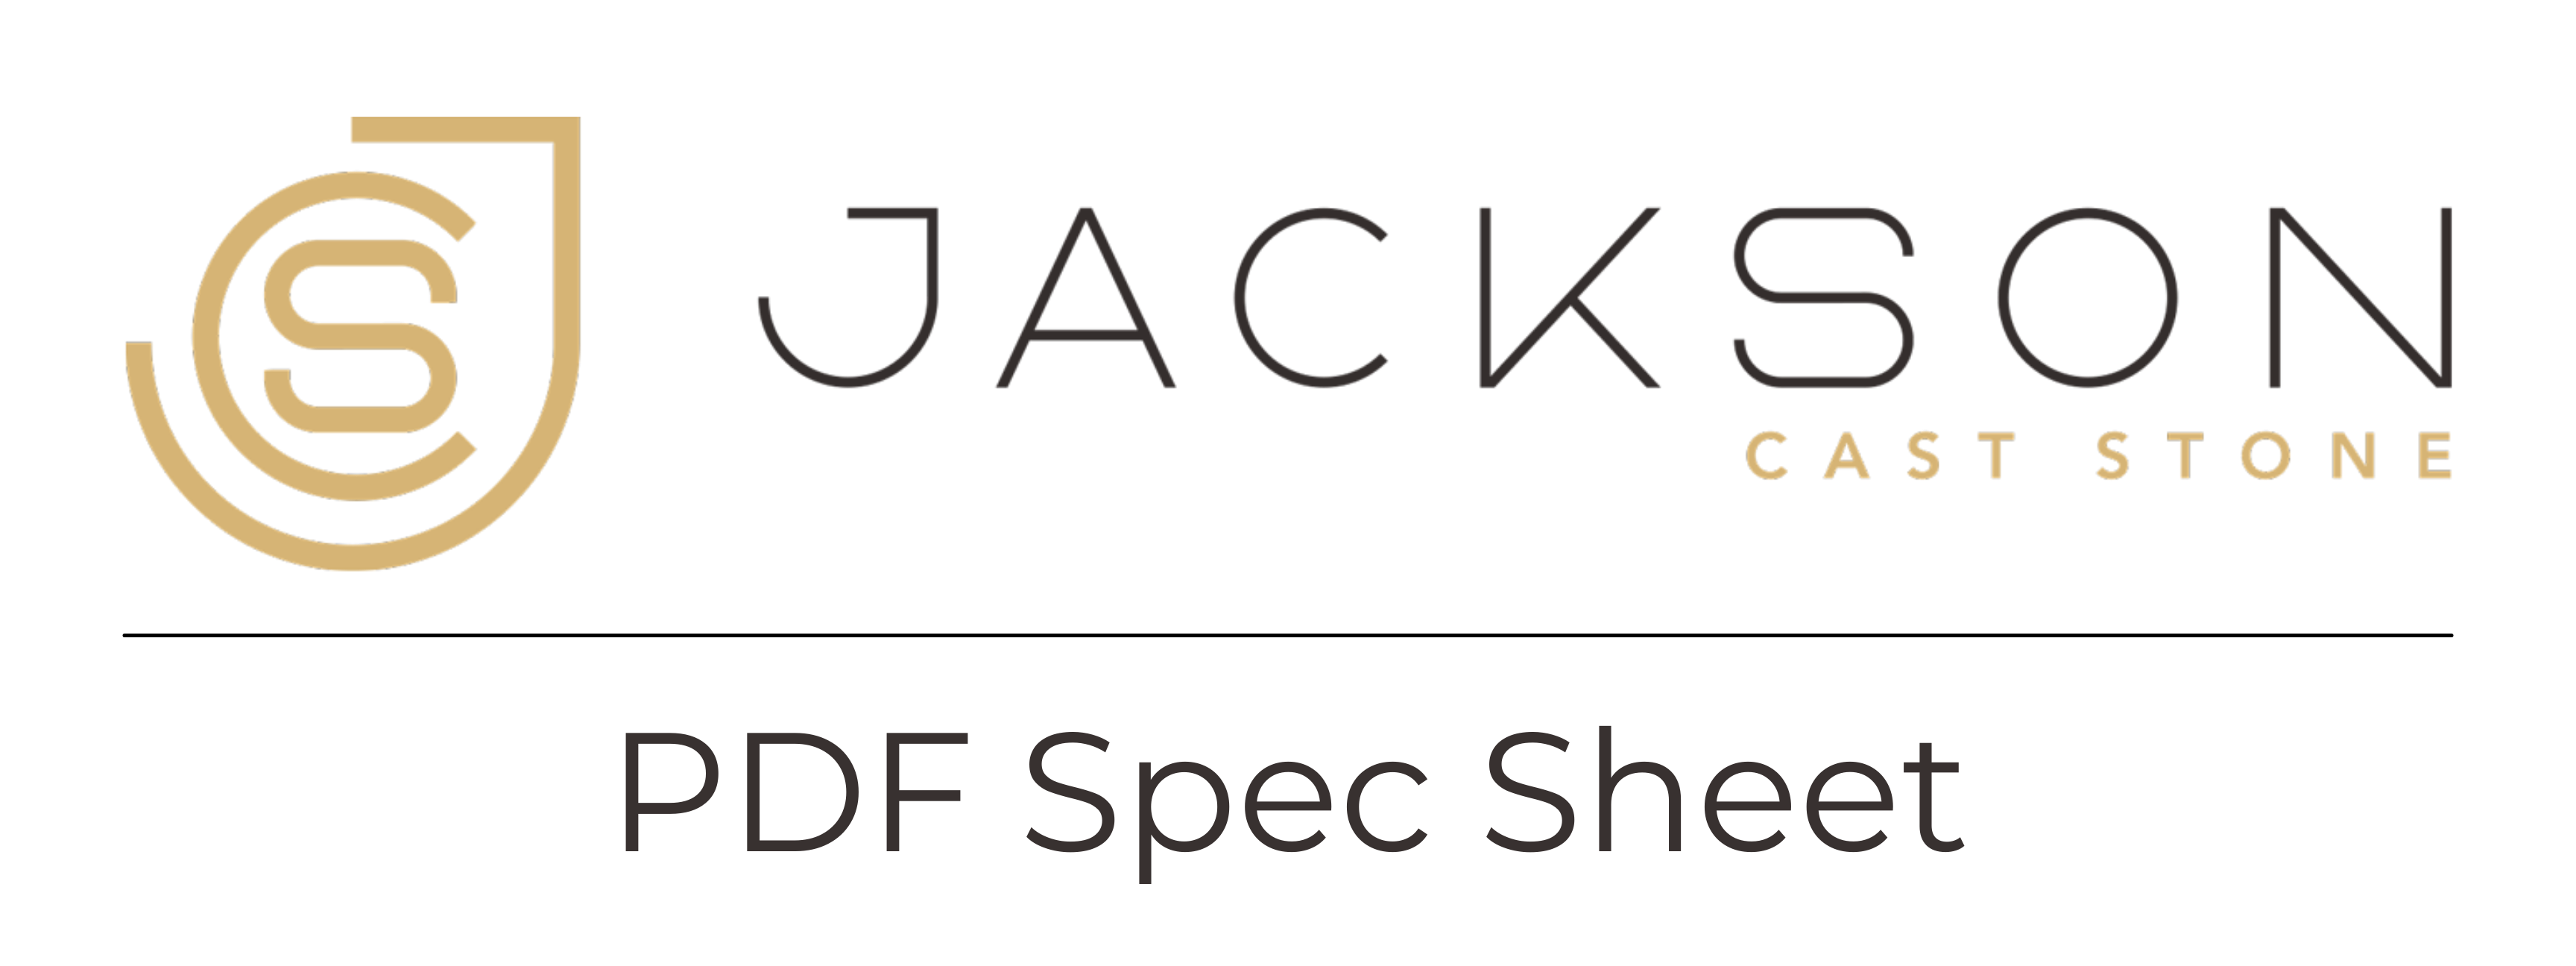 Jackson Cast Stone PDF Spec Sheet